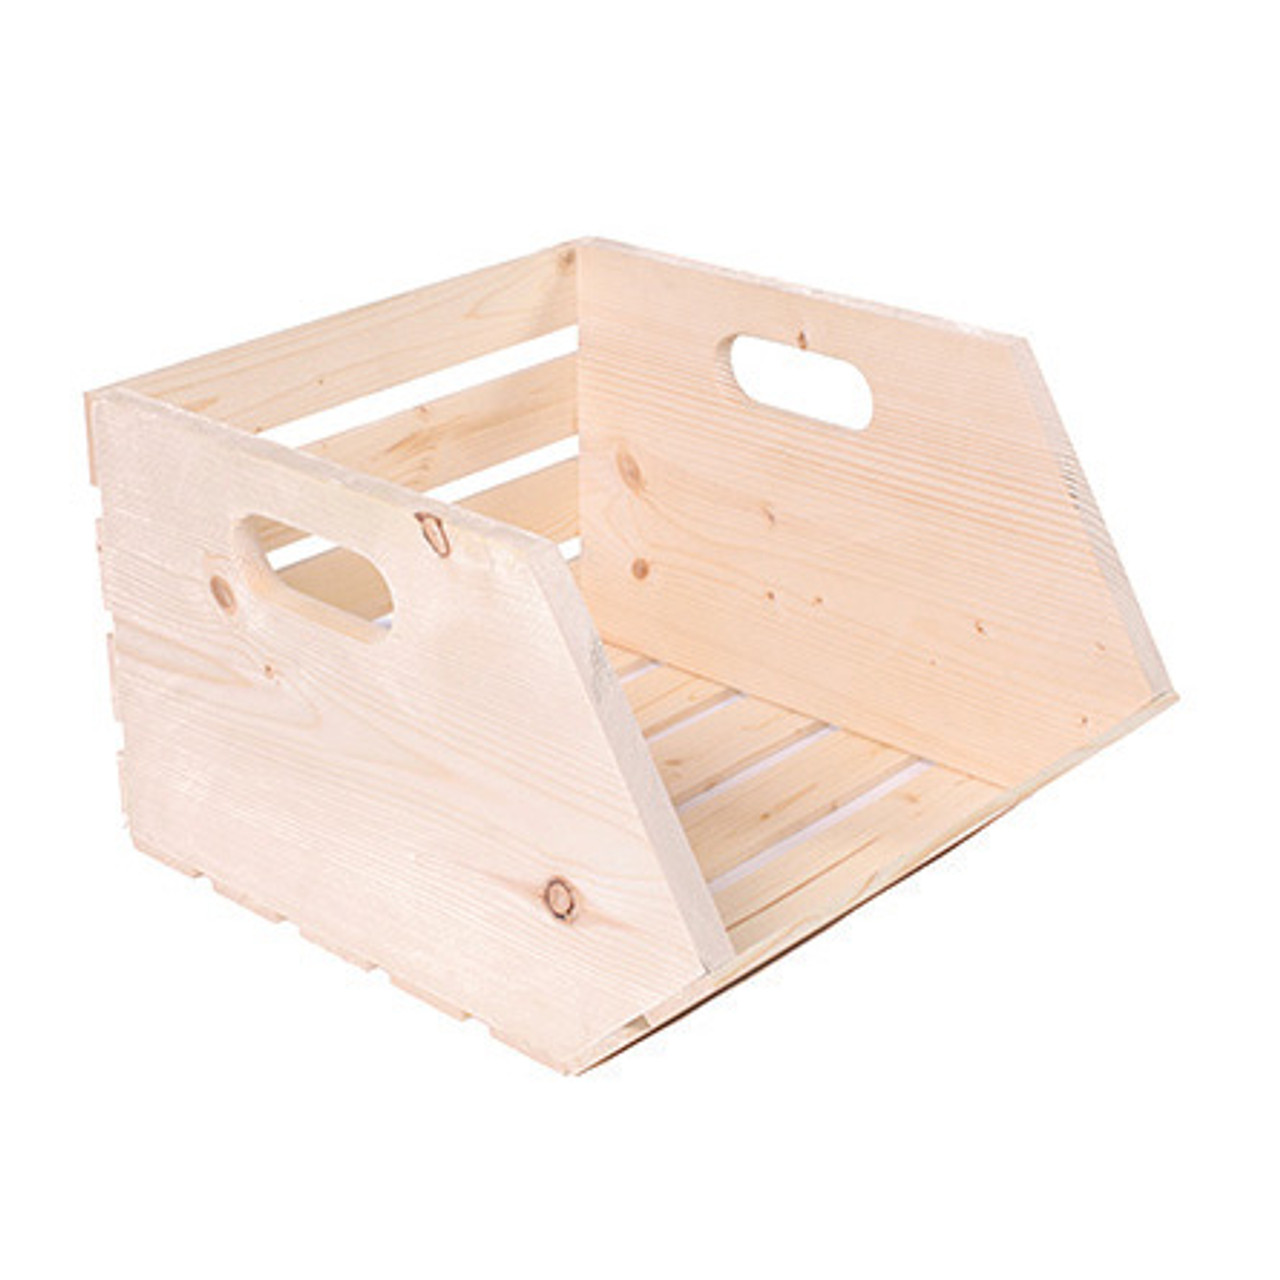 Pine Produce Crate 18"W x 15"D x 9.5H" - ea.